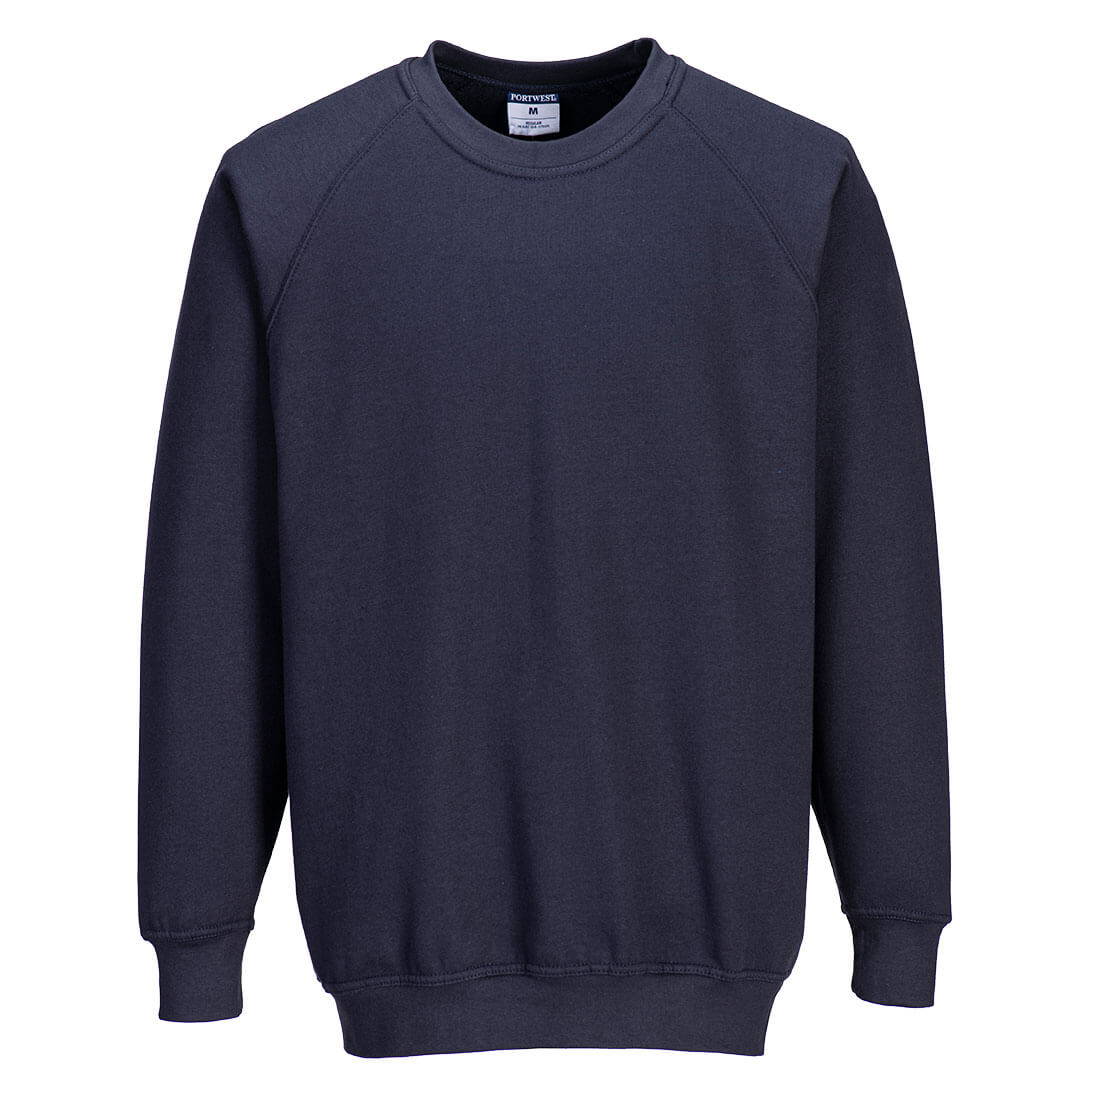 Portwest B300 Roma Sweatshirt for Leisurewear